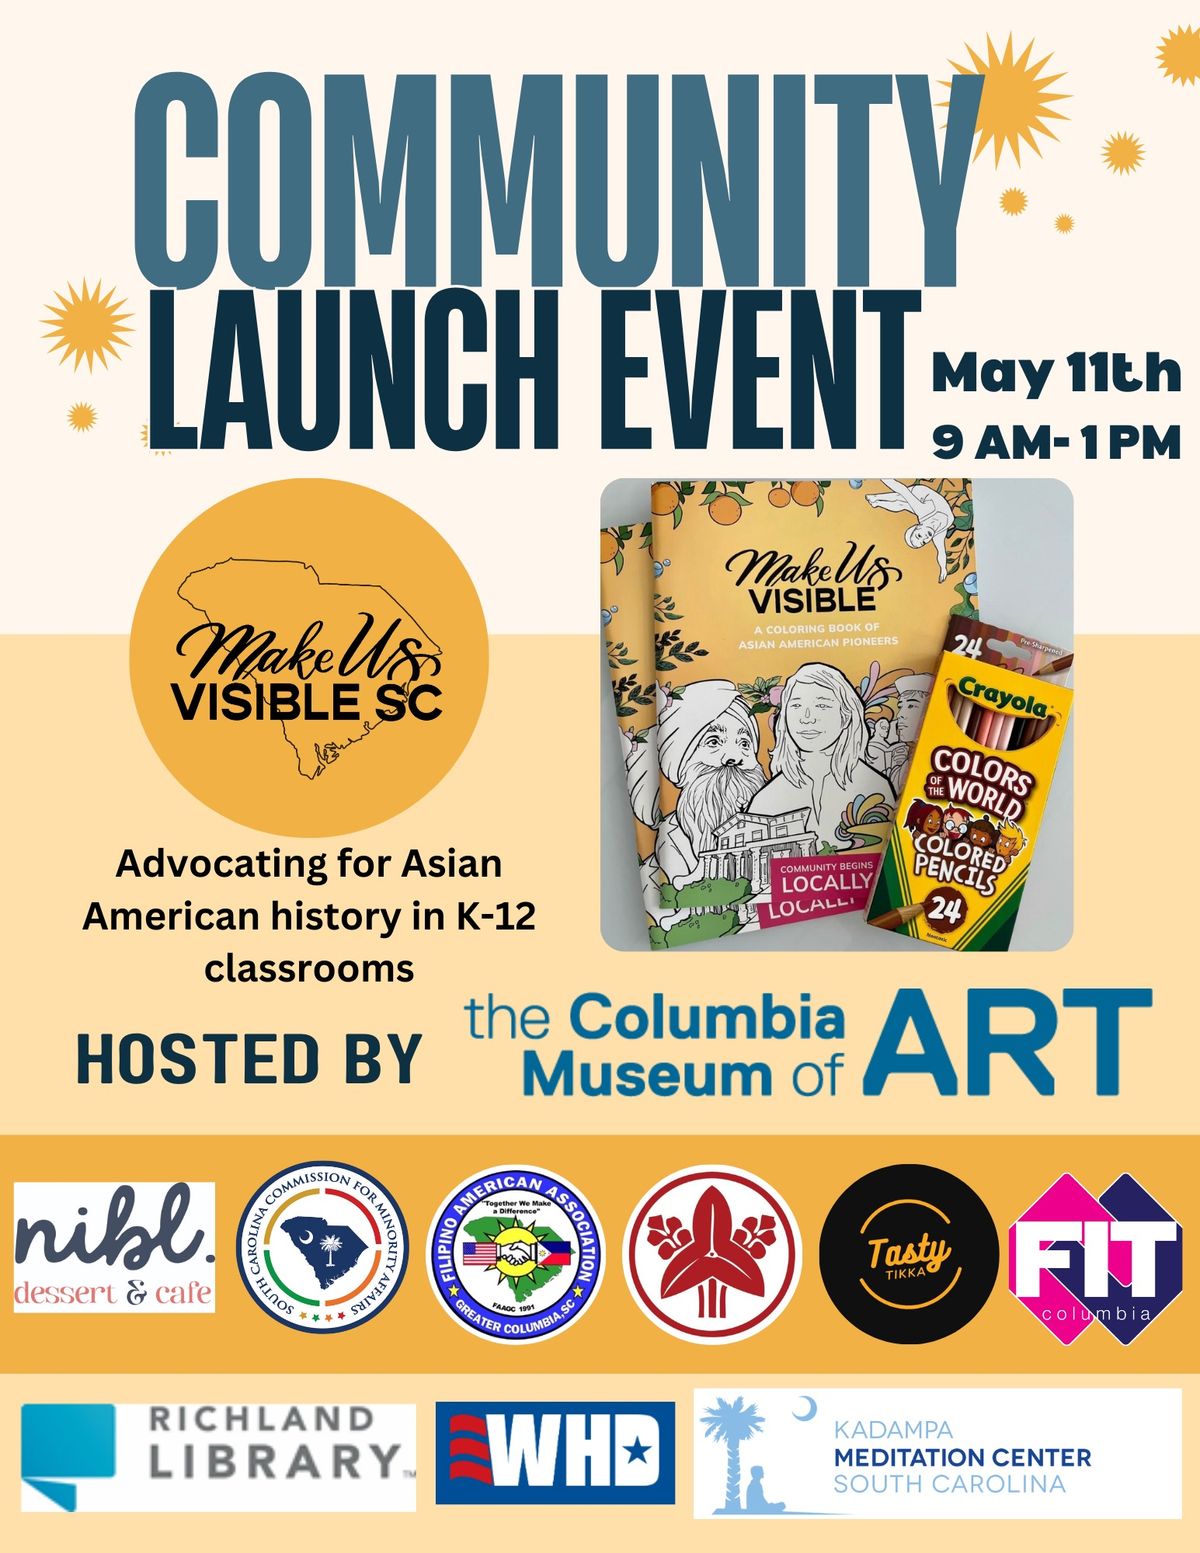 Make Us Visible SC Community Launch